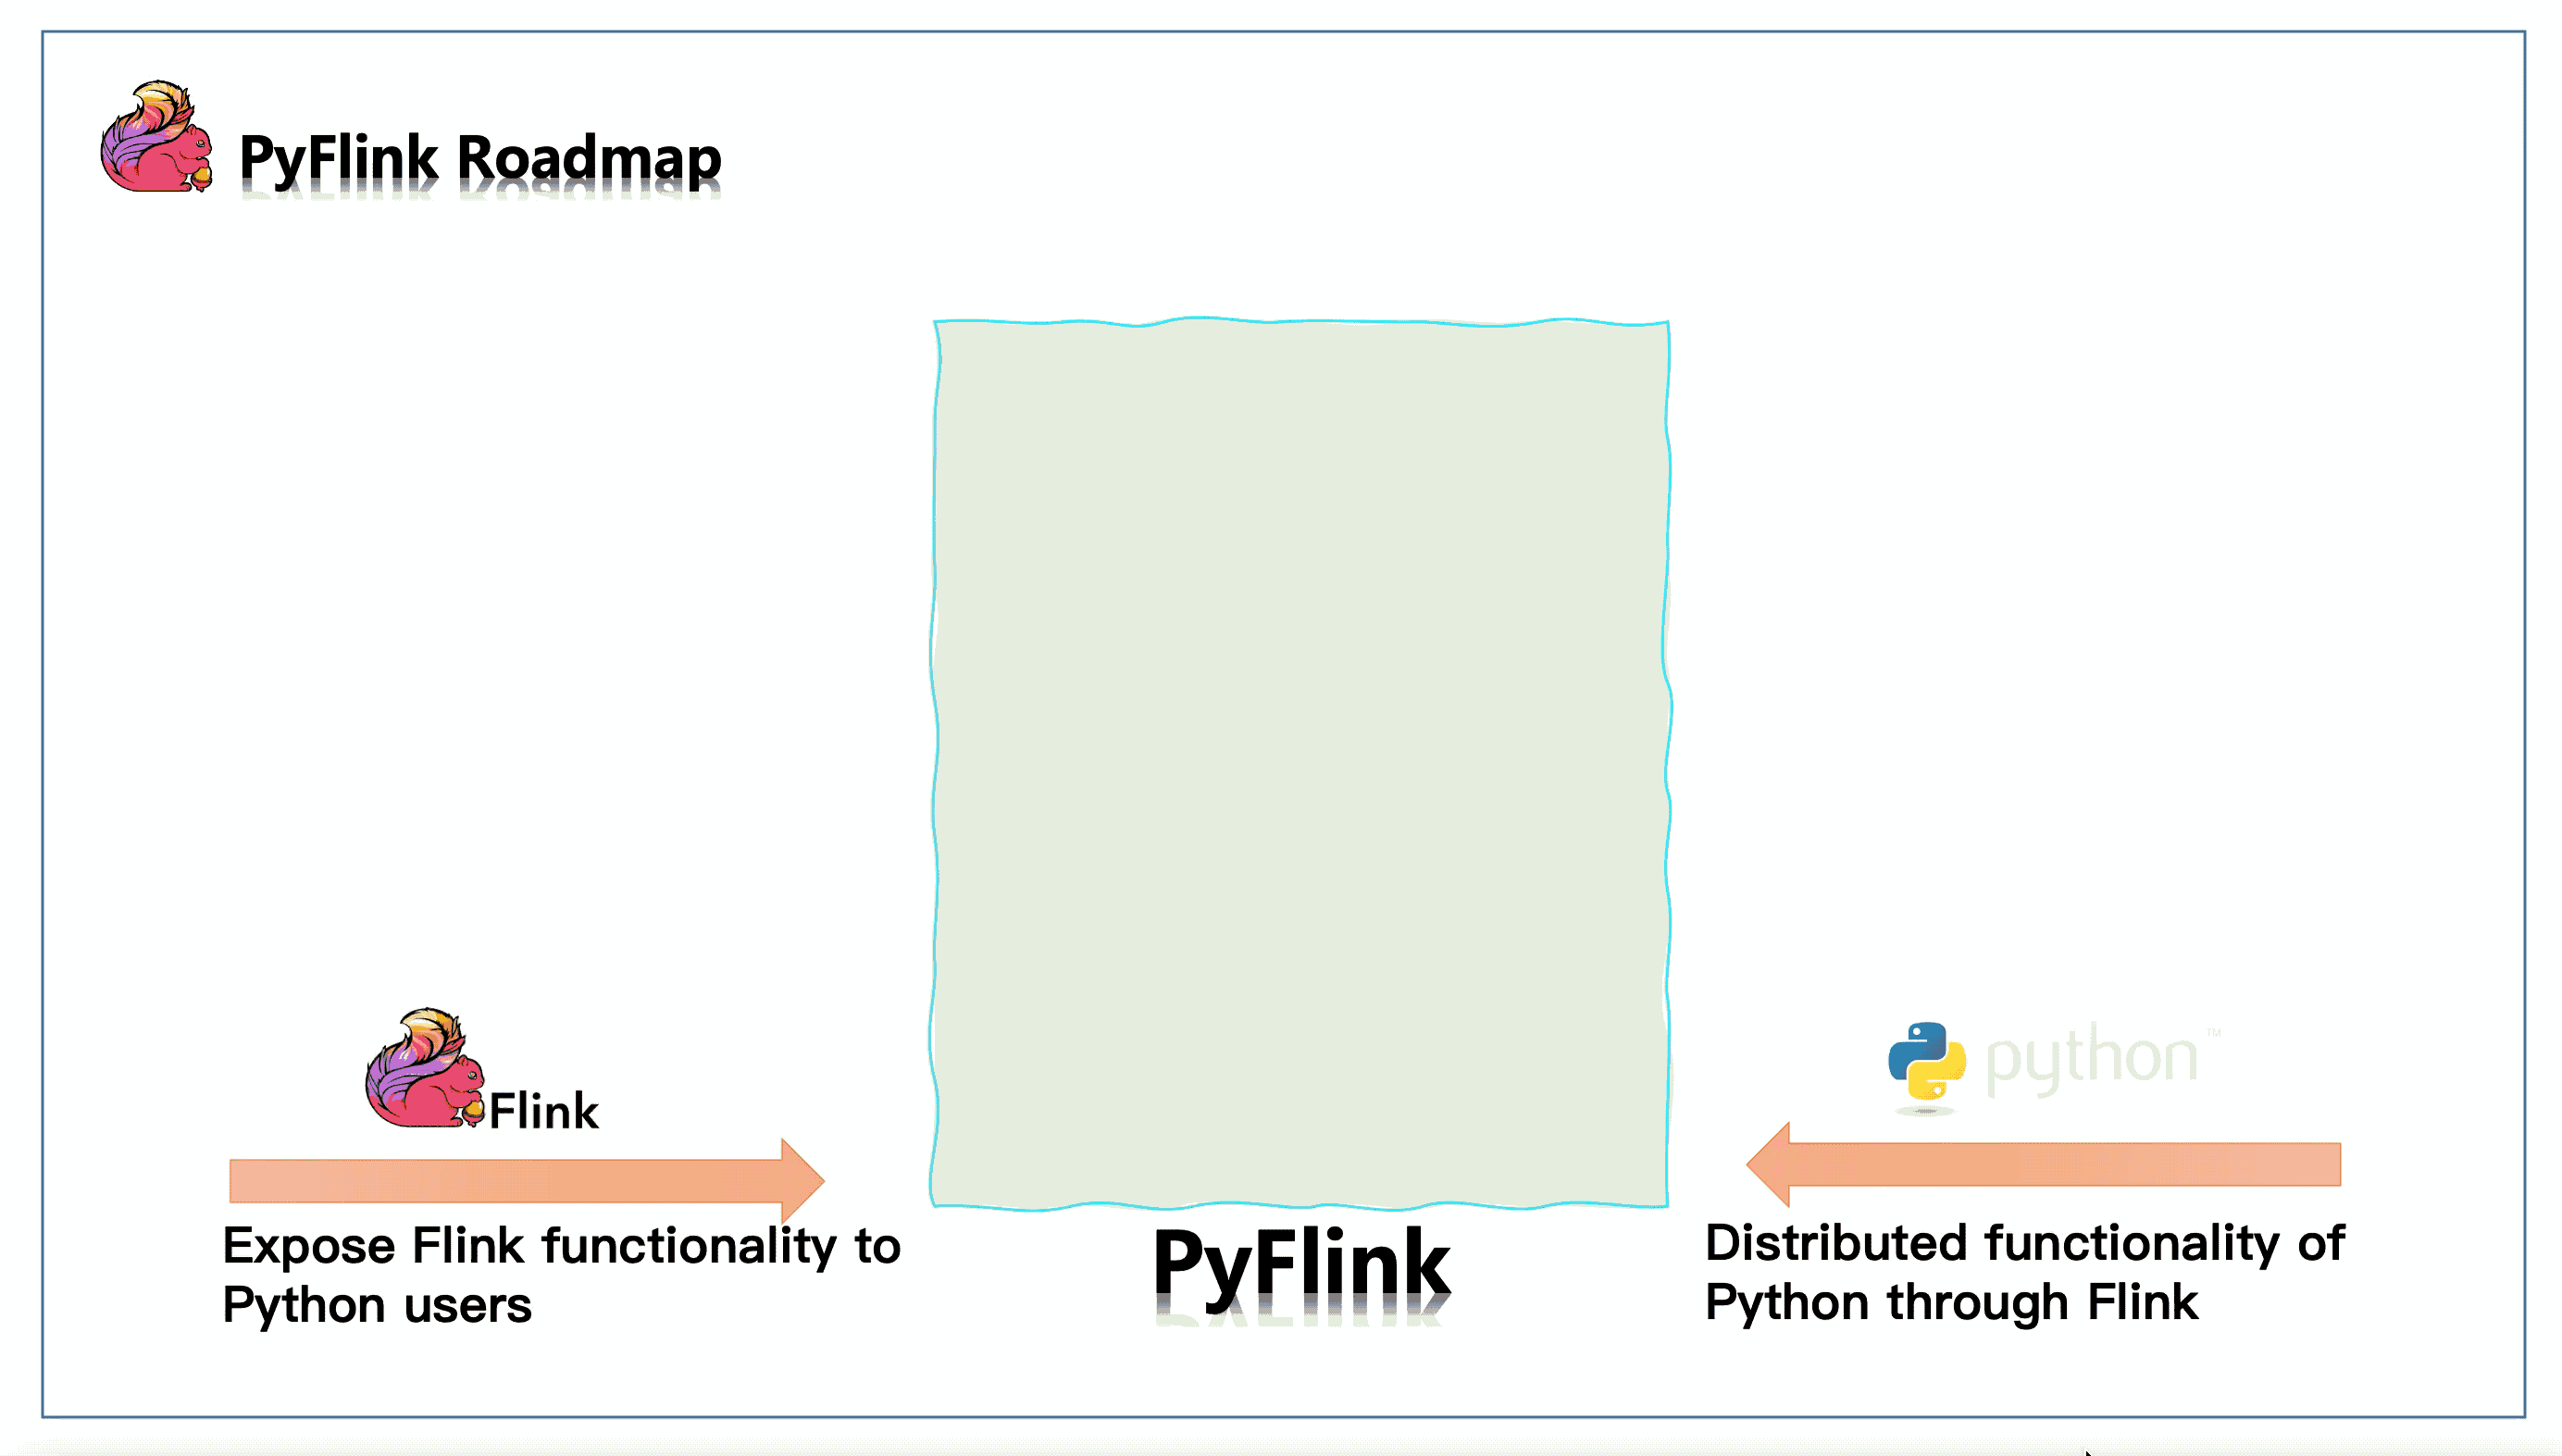 Roadmap of PyFlink